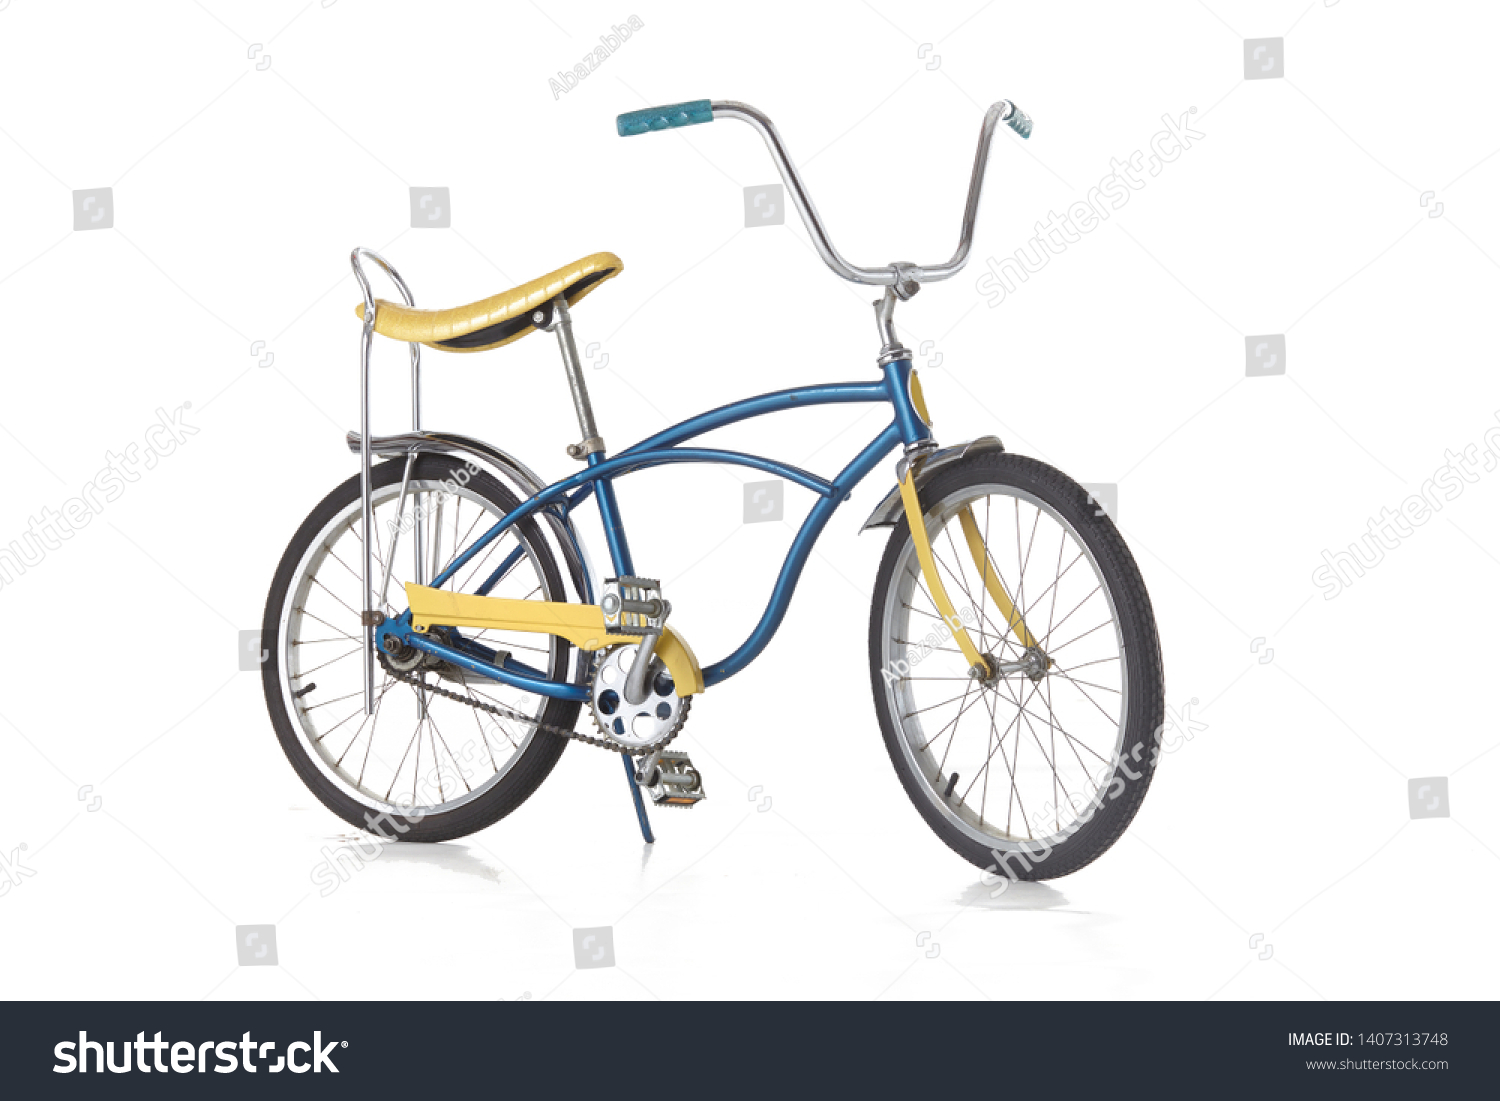 vintage banana seat bike